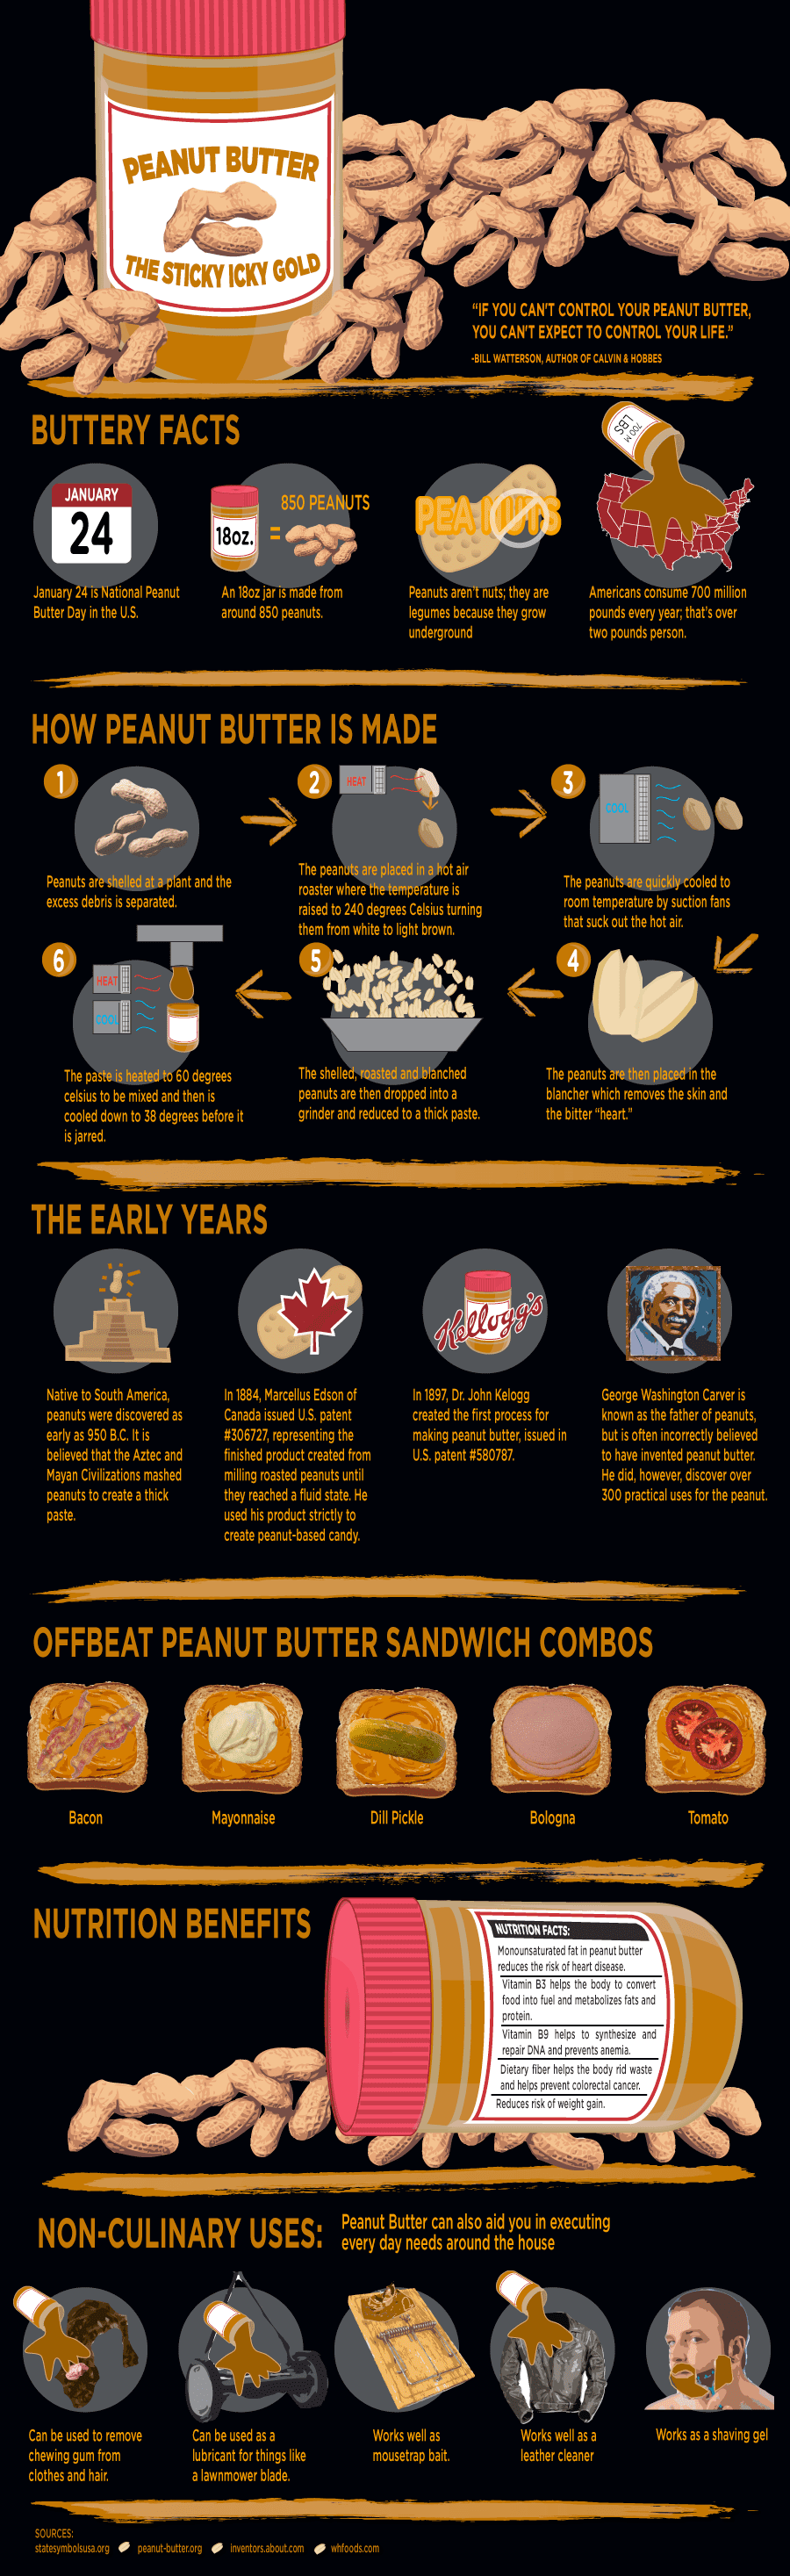 Did George Washington Carver Invent Peanut Butter